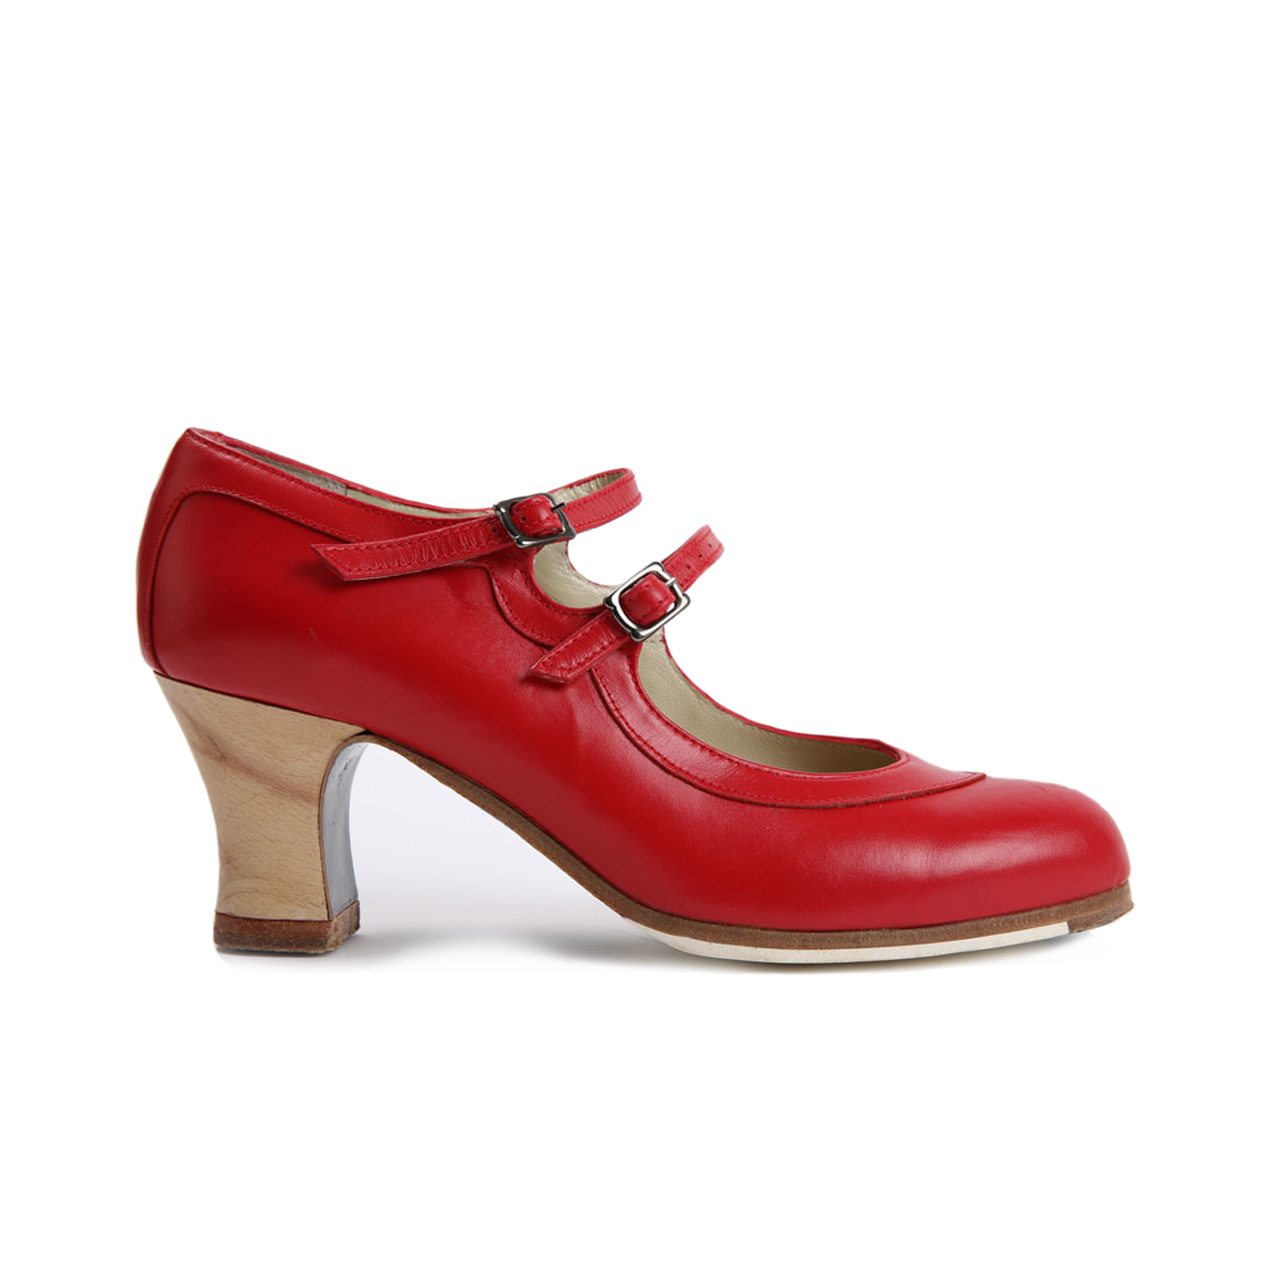 Chaussures Flamenco Dos Correas Cuir Rouge